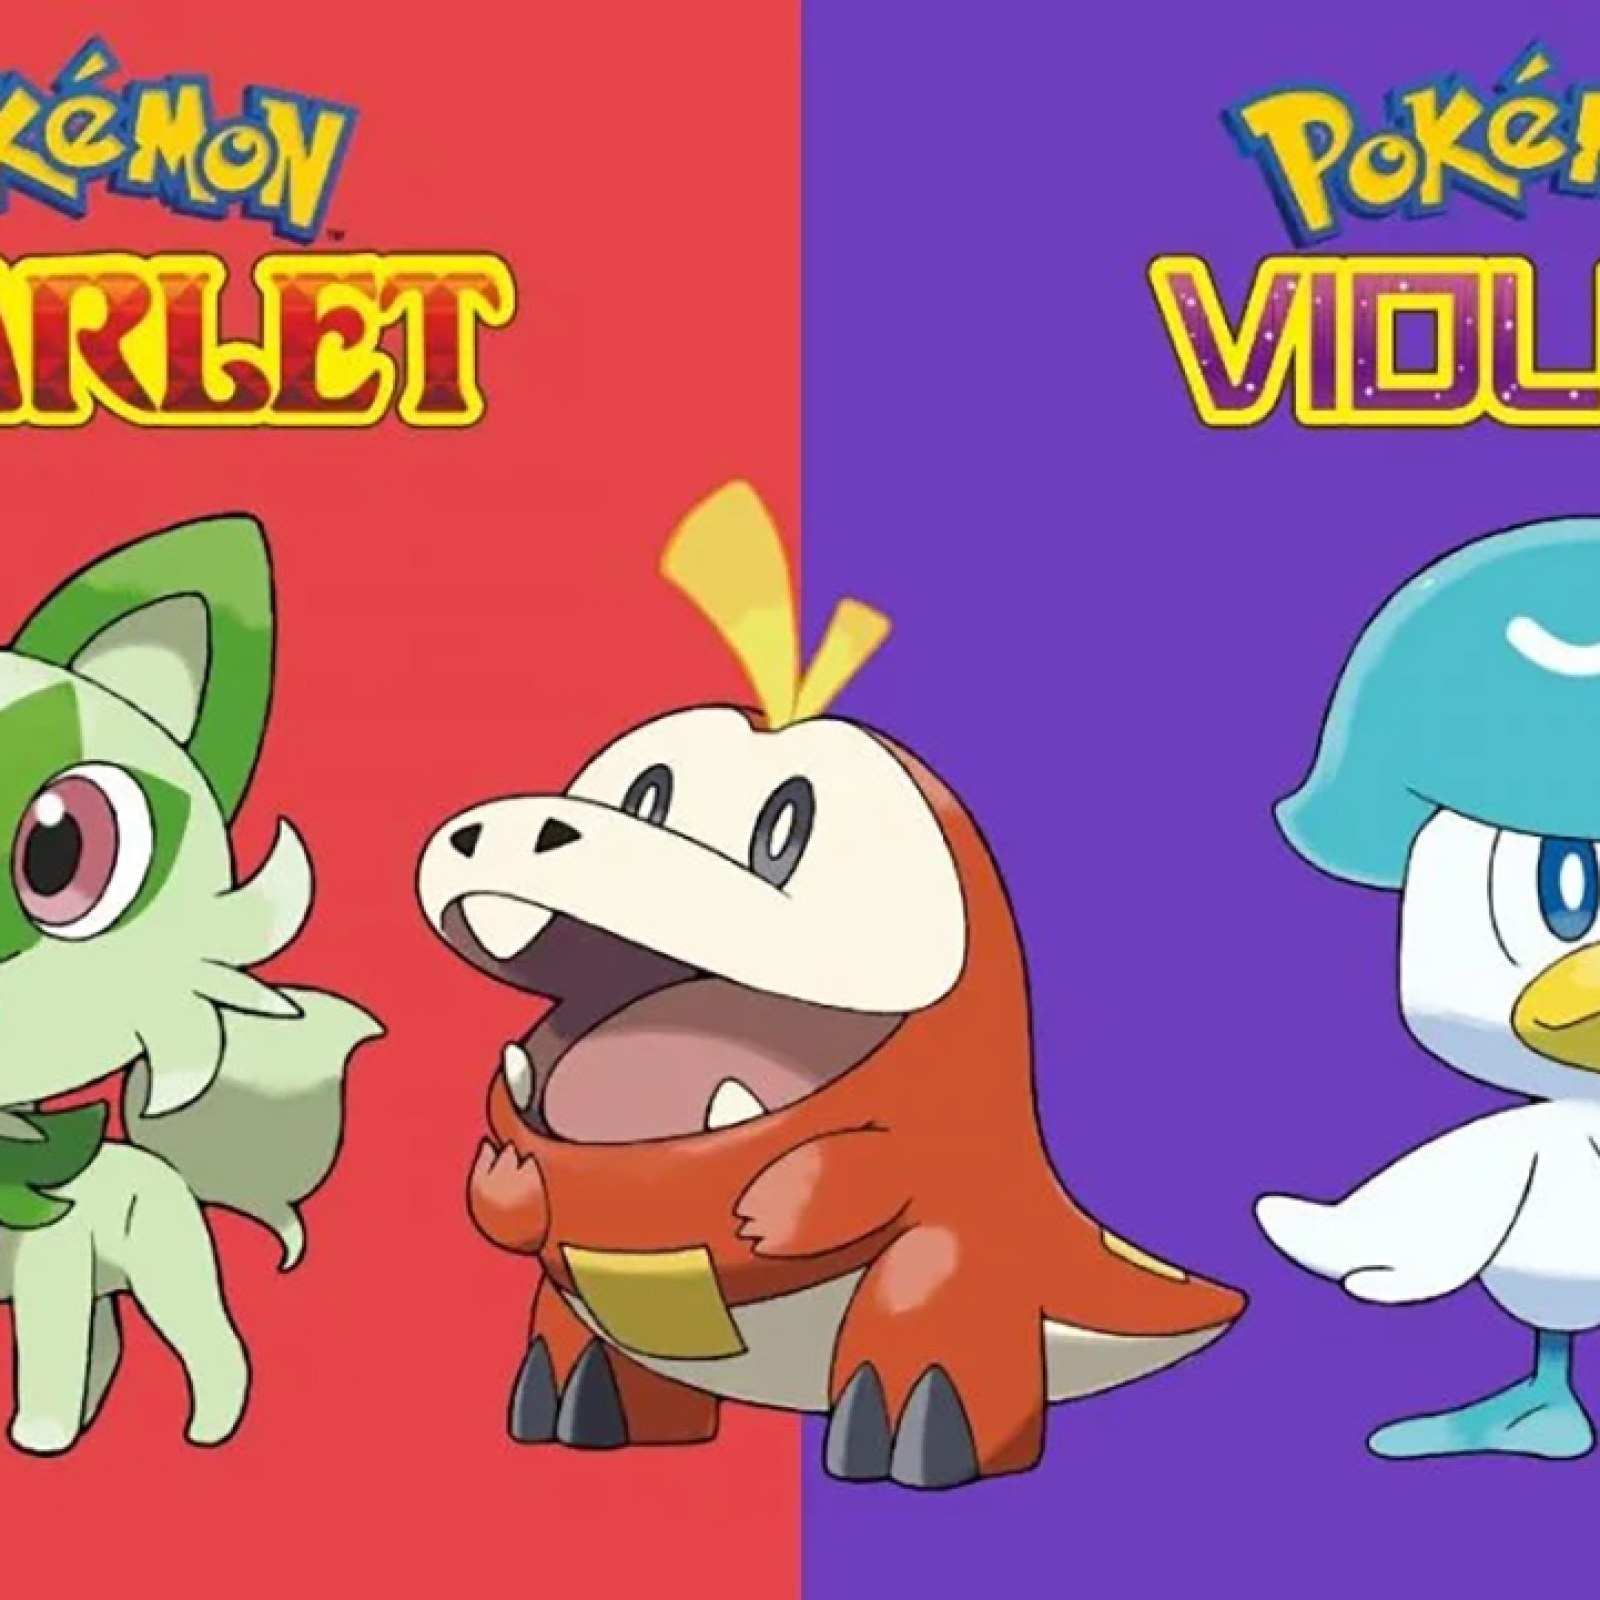 ALL STARTER POKEMON Evolutions in Pokemon Scarlet & Violet 